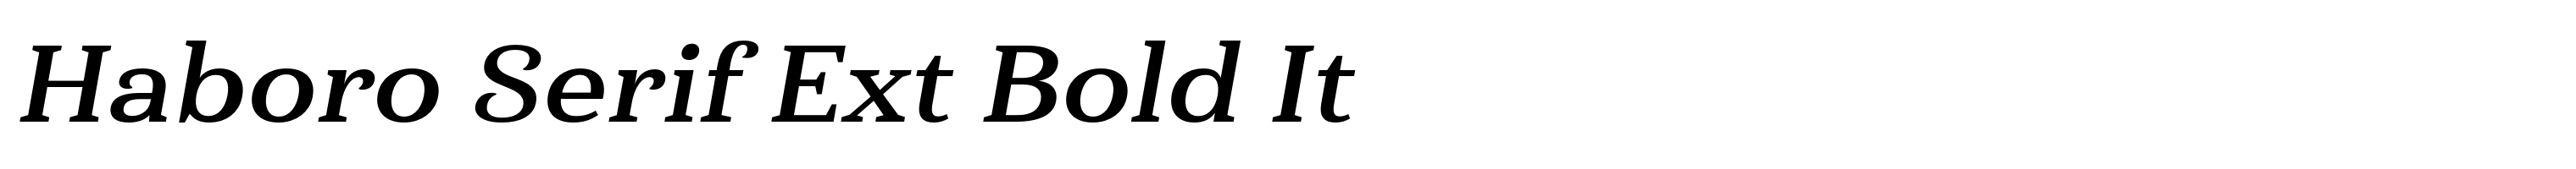 Haboro Serif Ext Bold It